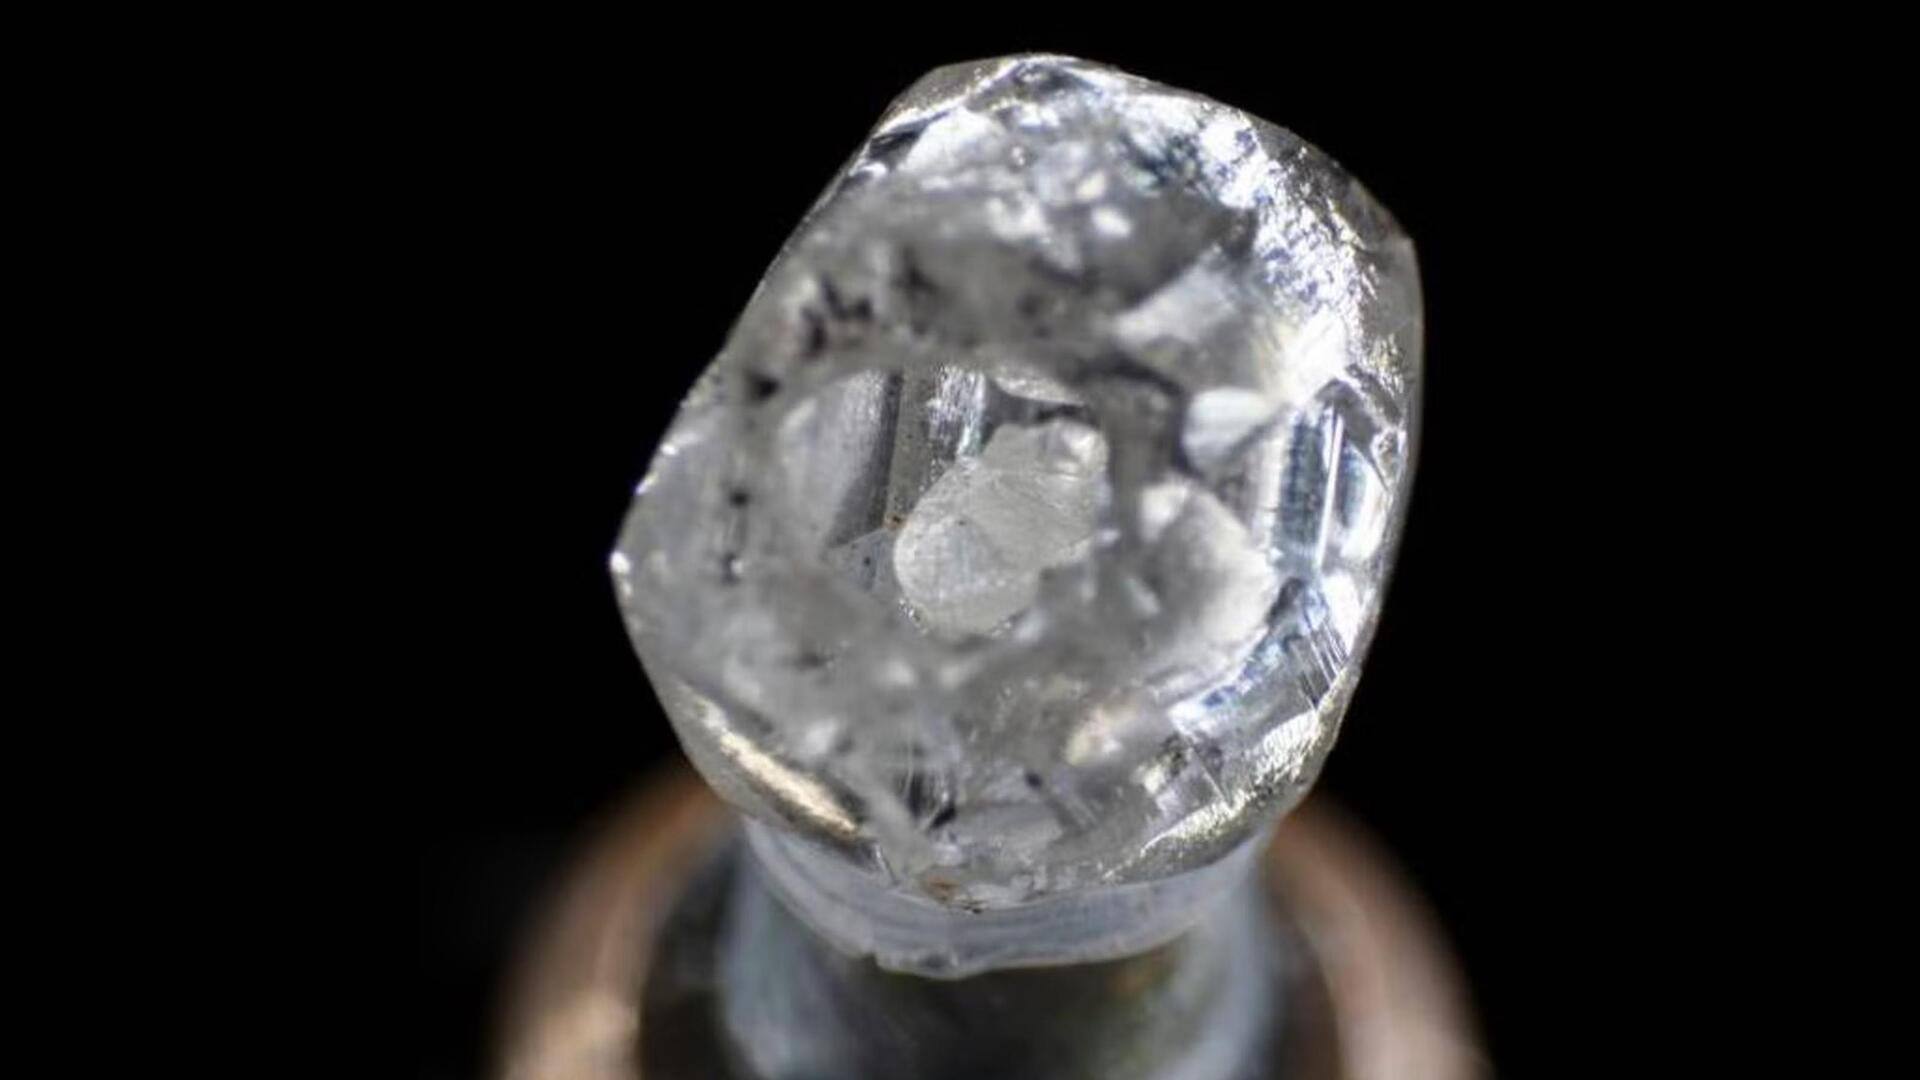 गुजरात: सूरत में मिला 'बीटिंग हार्ट' नामक दुर्लभ हीरा, हैरान